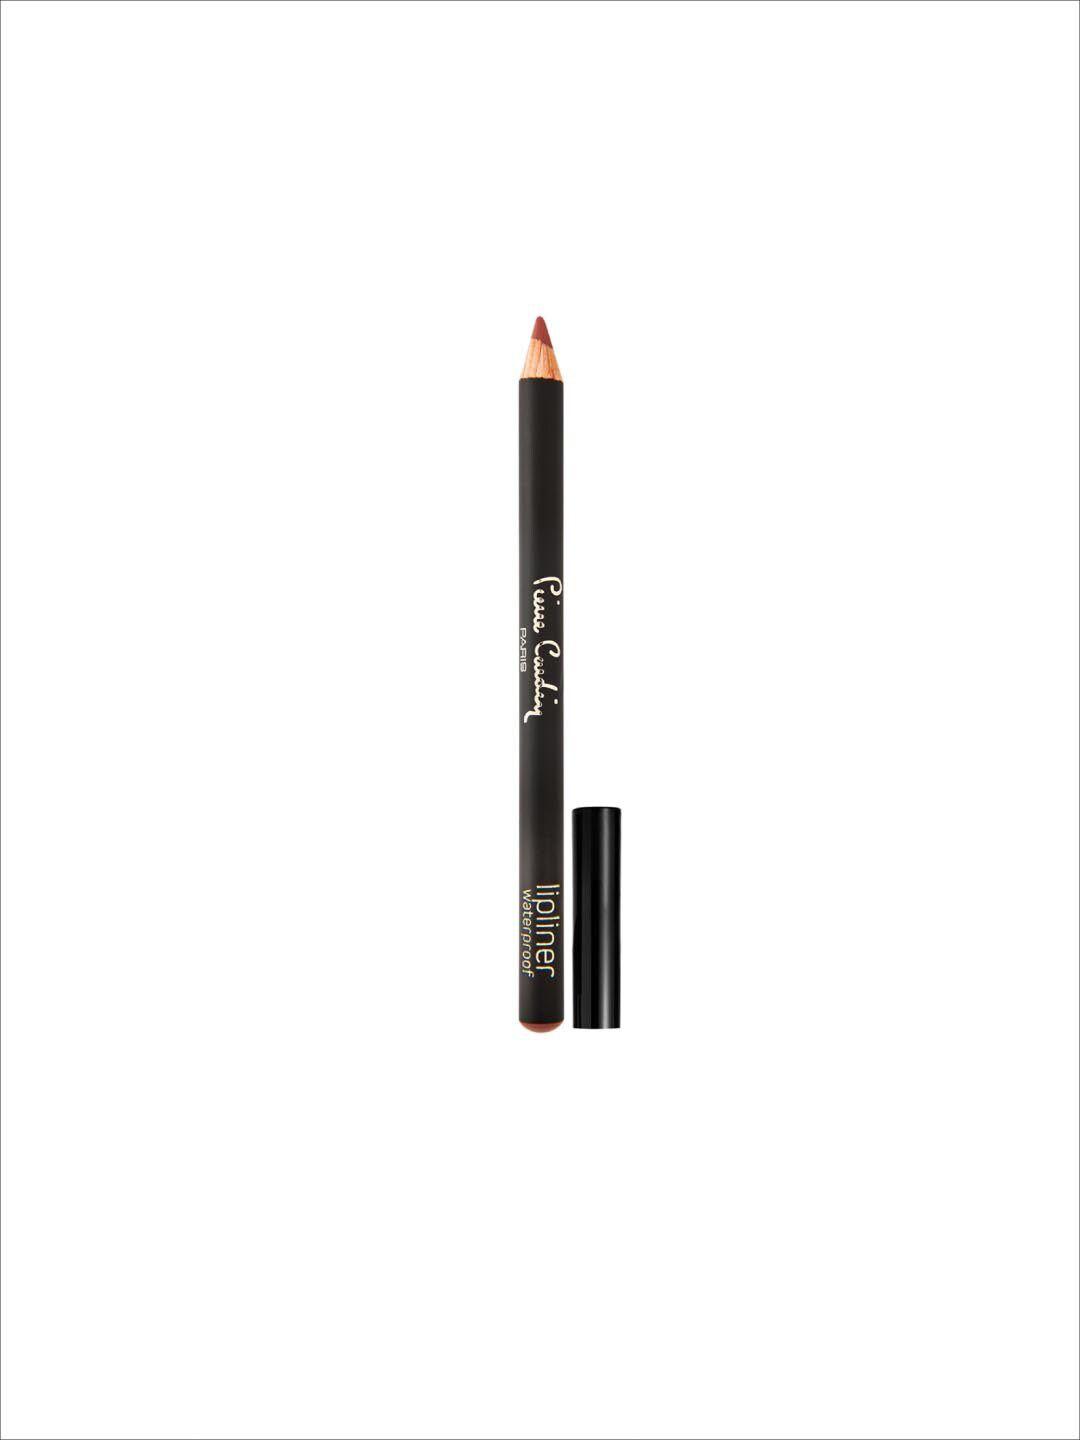 pierre cardin paris waterproof & longlasting lip liner pencil with vitamin e 0.4g - burnt rose 105